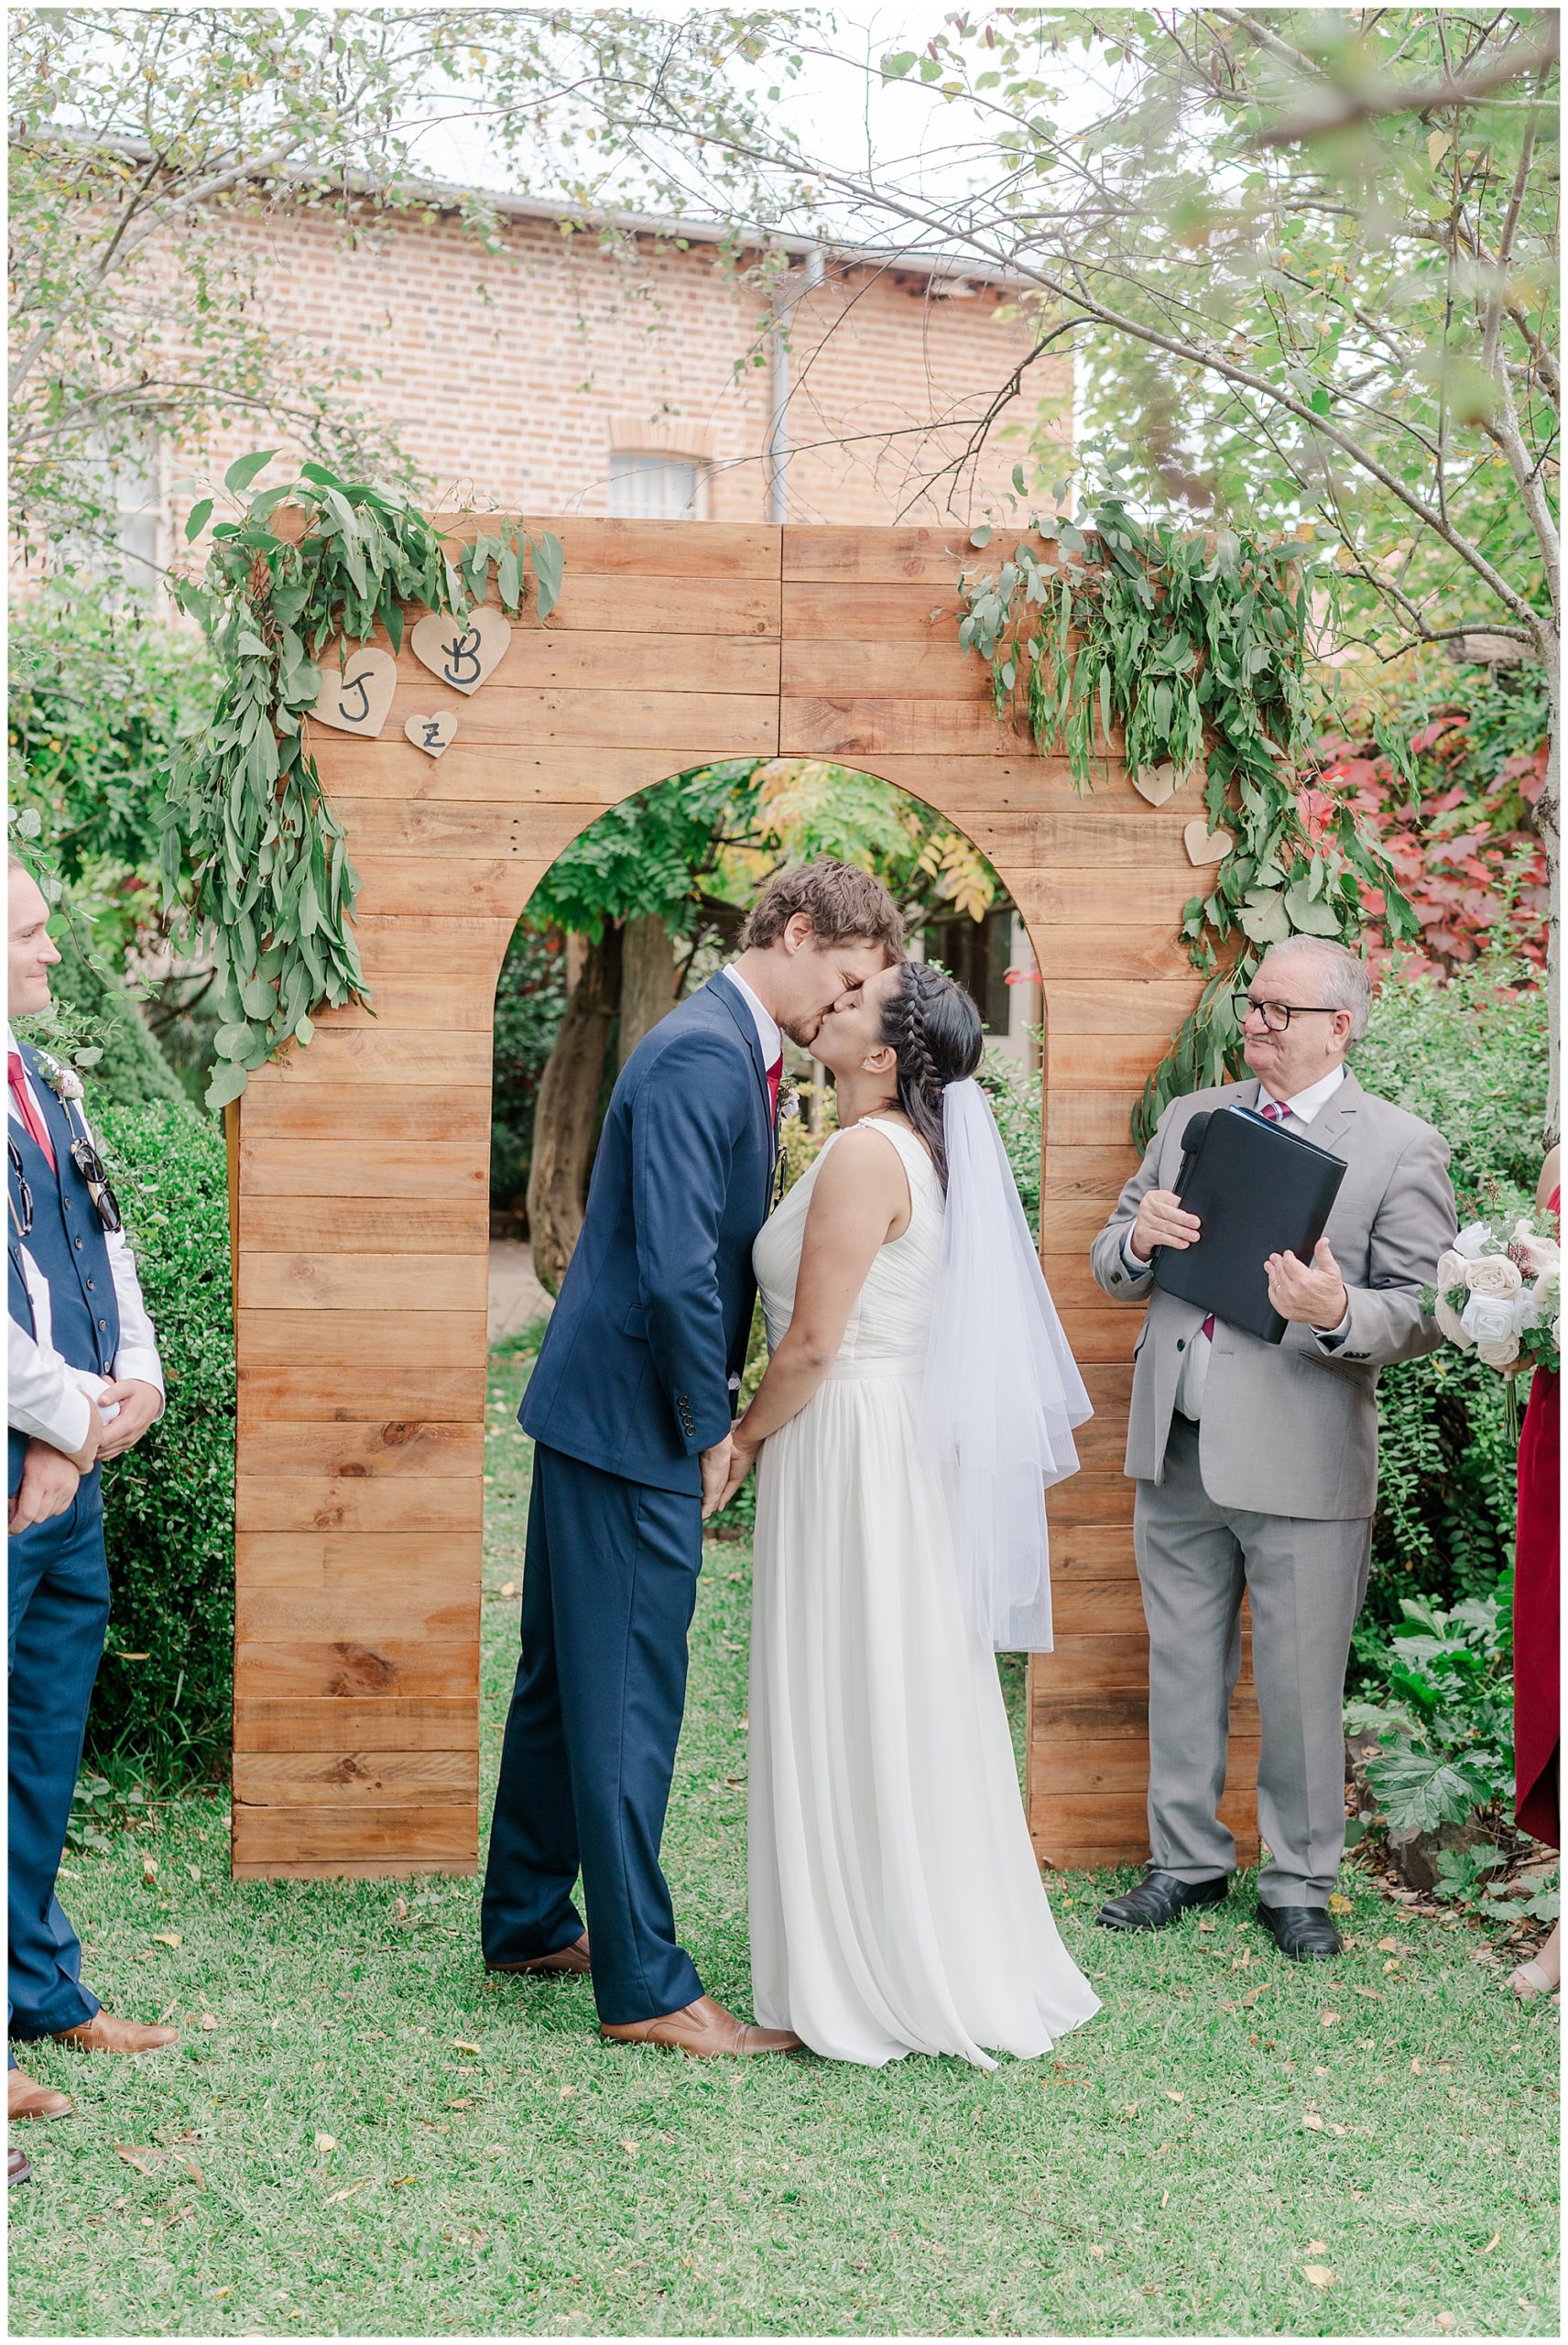 Bride and groom kissing | Destination Wedding photography